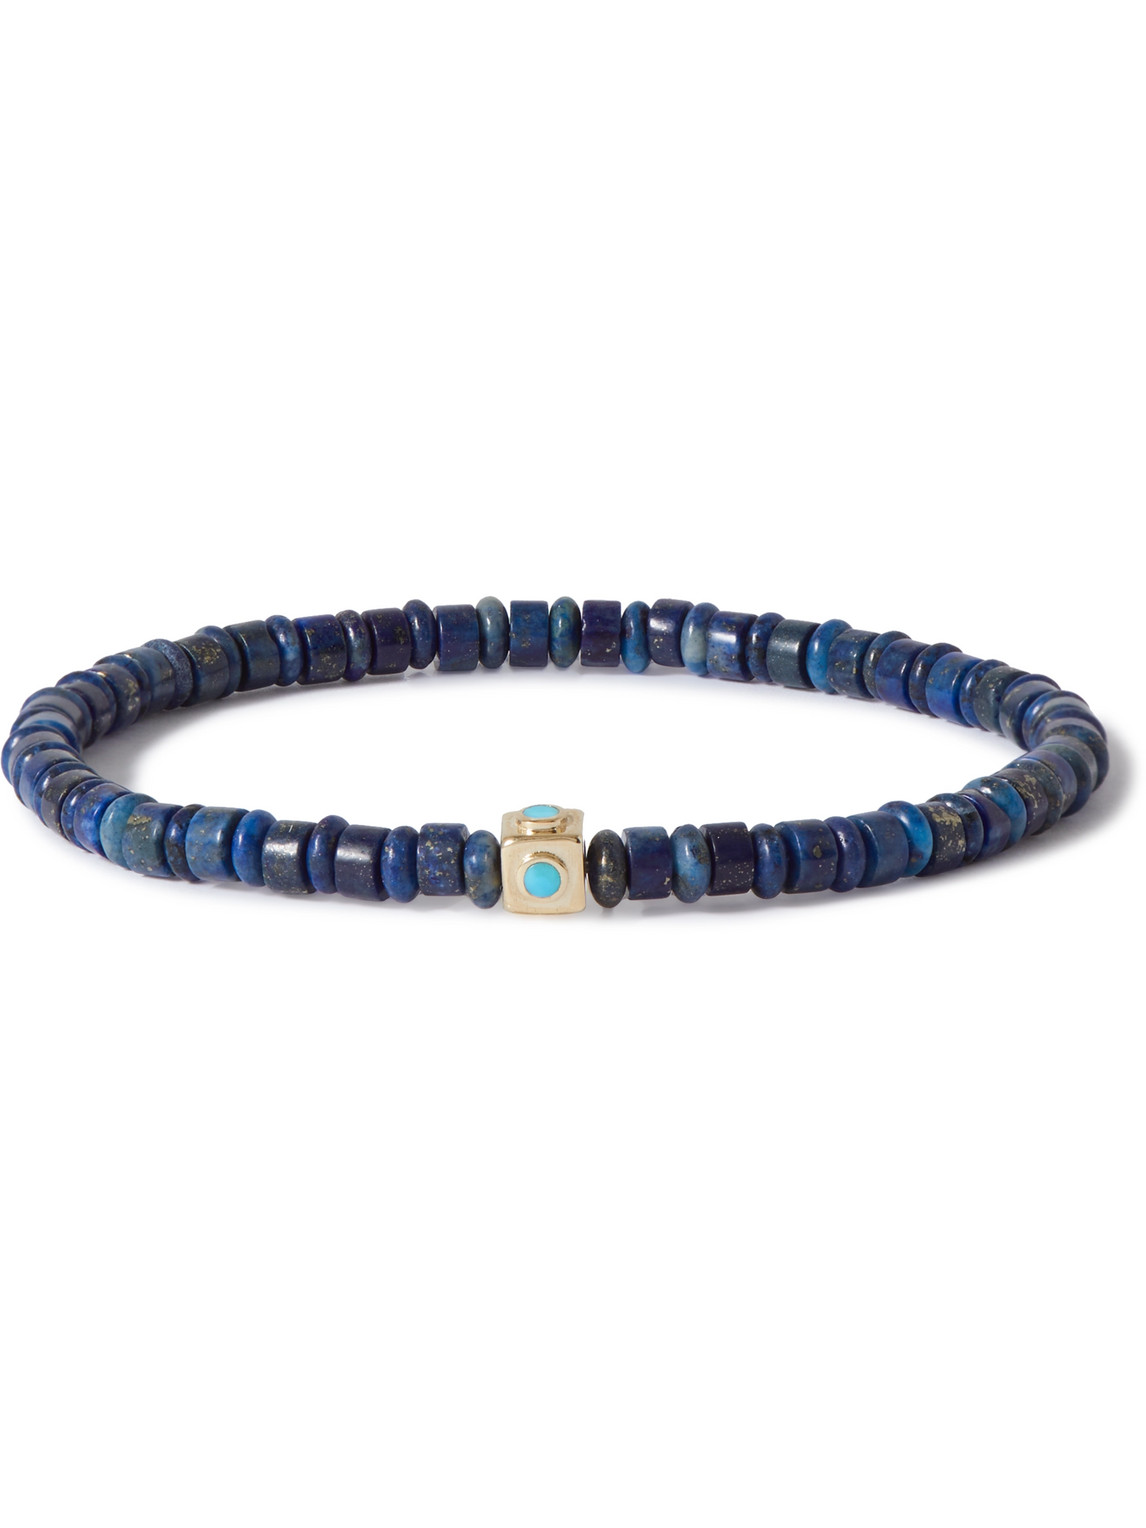 Luis Morais Gold, Turquoise And Lapis Lazuli Beaded Bracelet In Blue